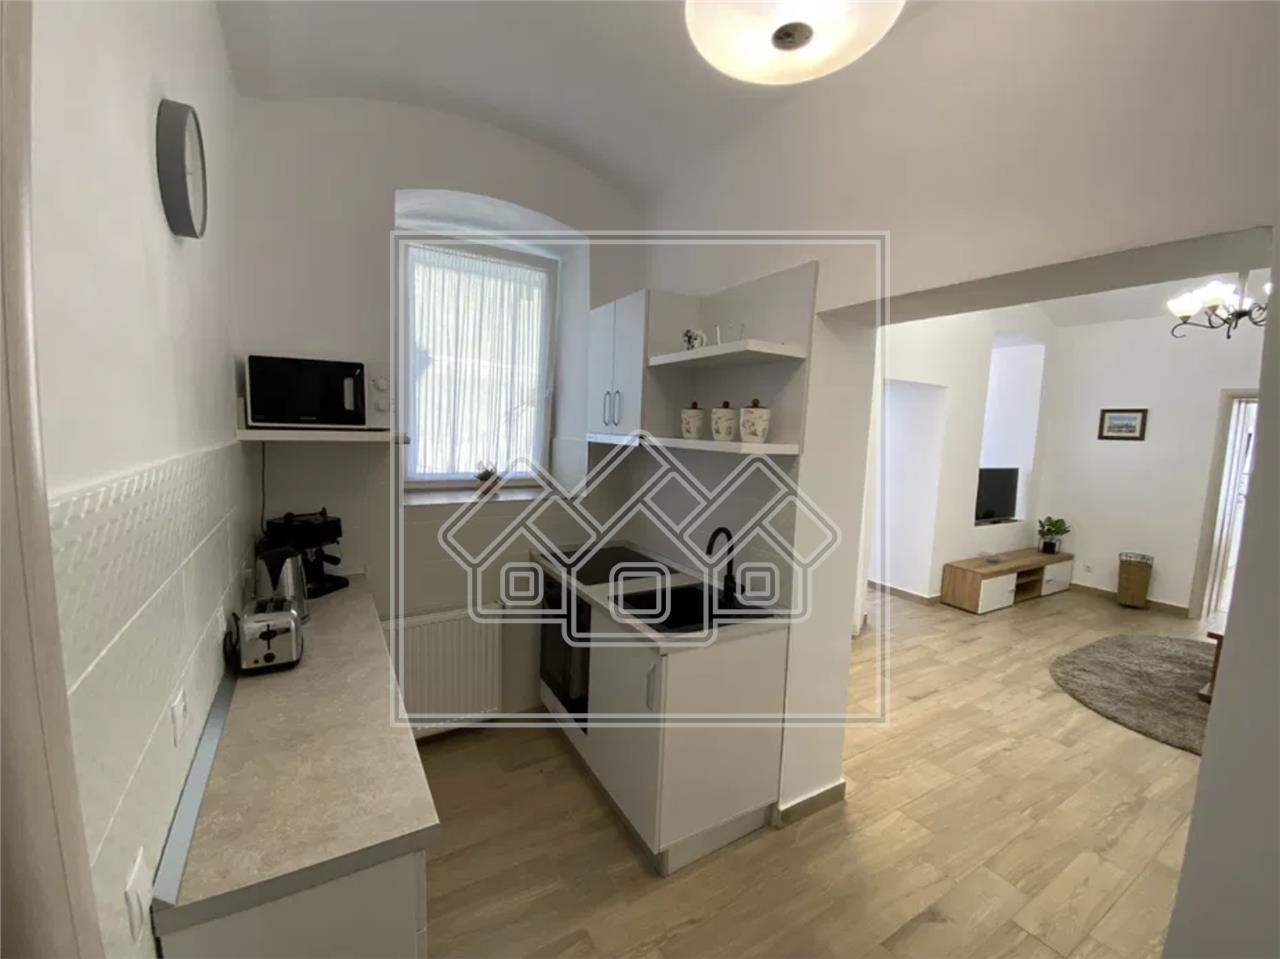 Apartament de vanzare in Sibiu - centru istoric - 84mp - Bis. Ursuline